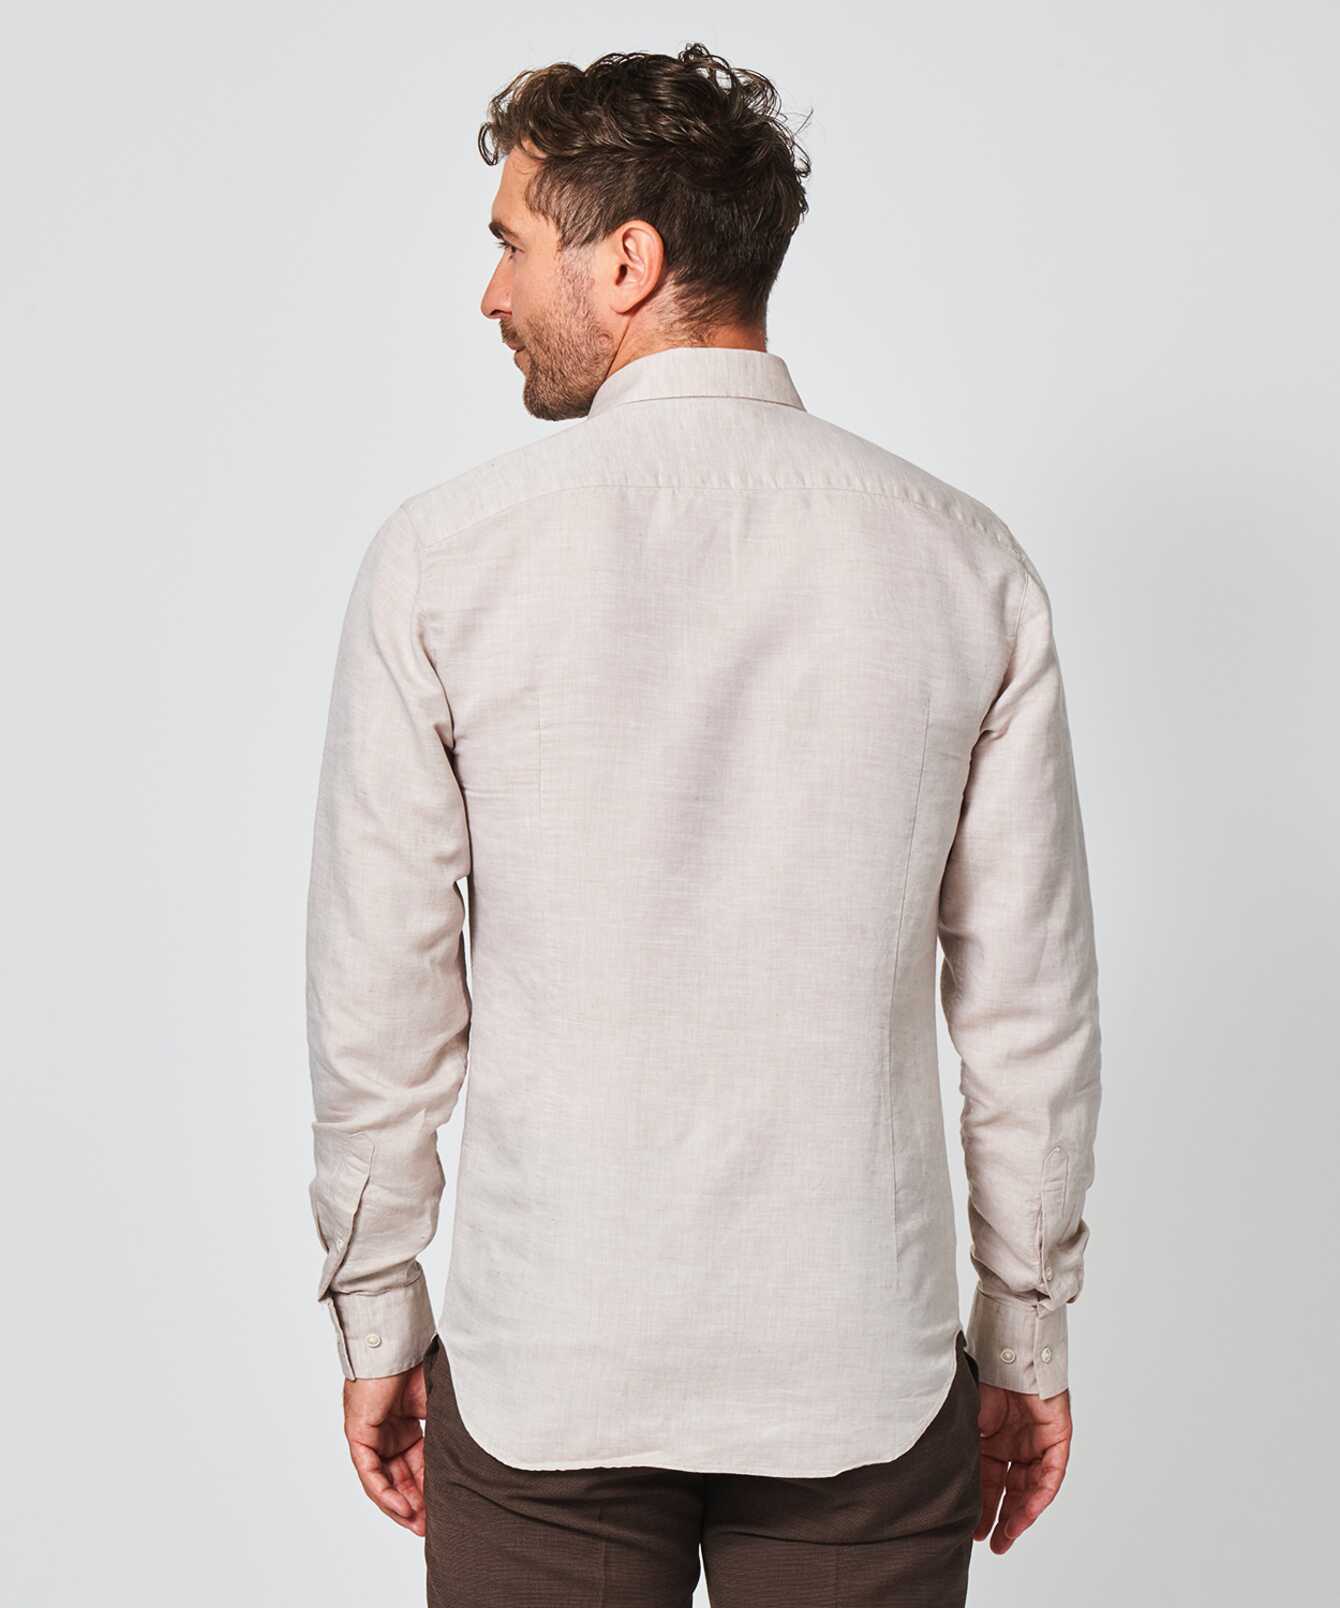 Shirt Portofino Beige Linen Shirt Extra Long Sleeve The Shirt Factory